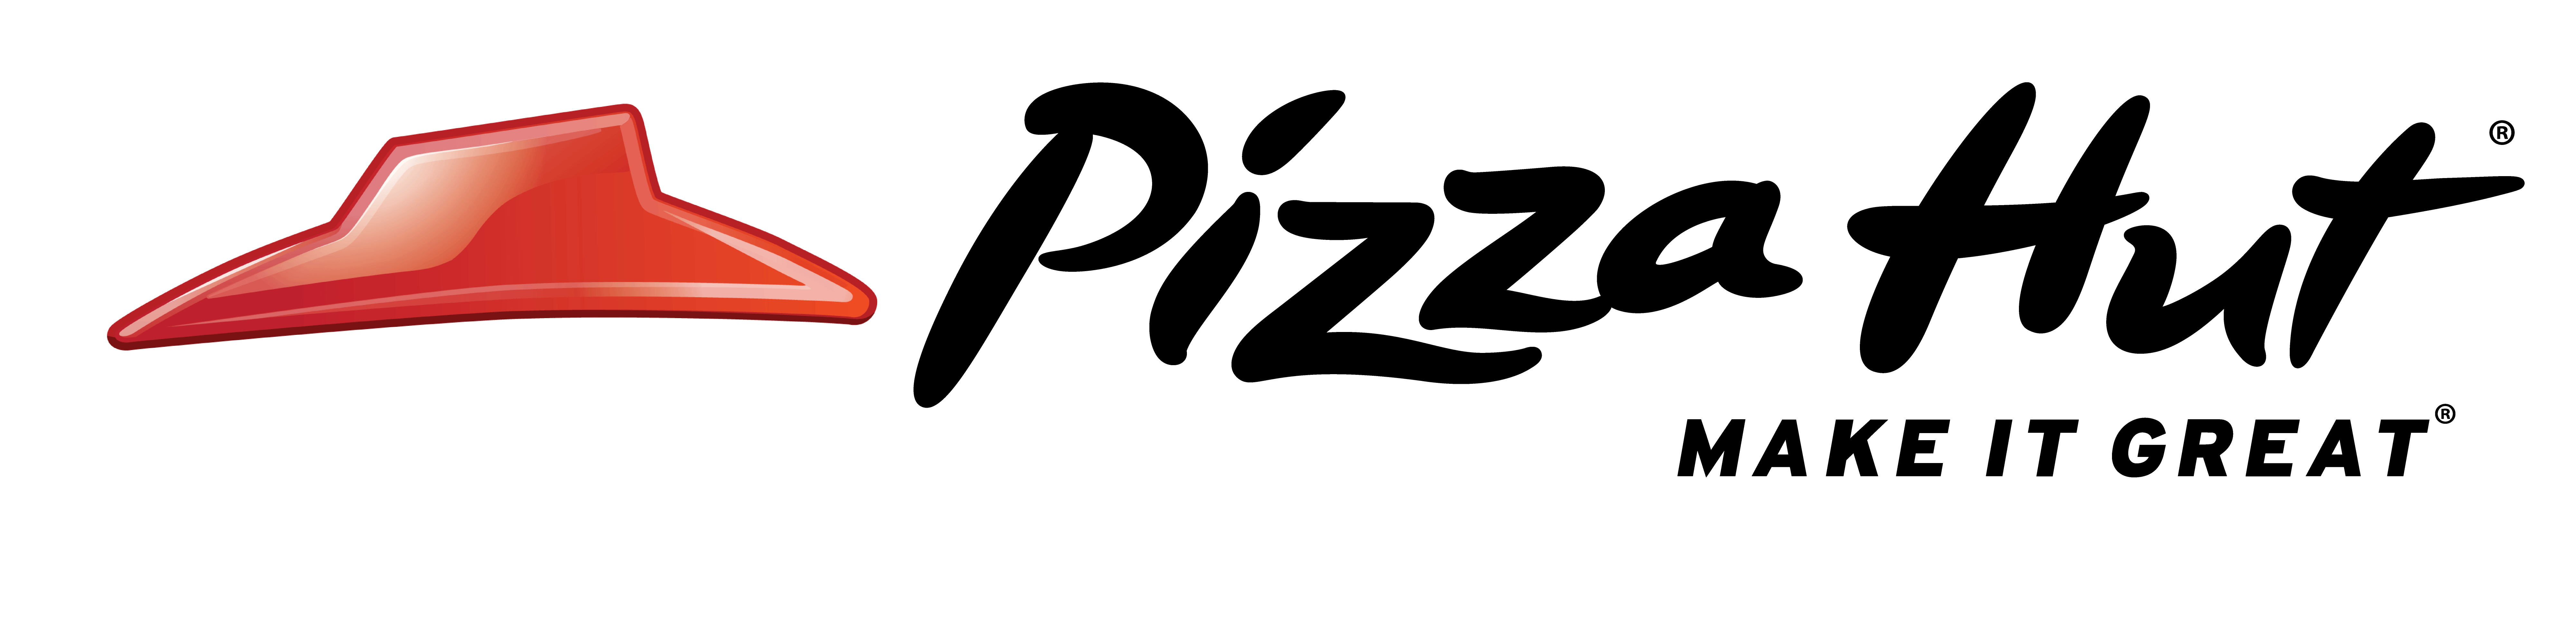 pizza hut make ?t great png logo #3813